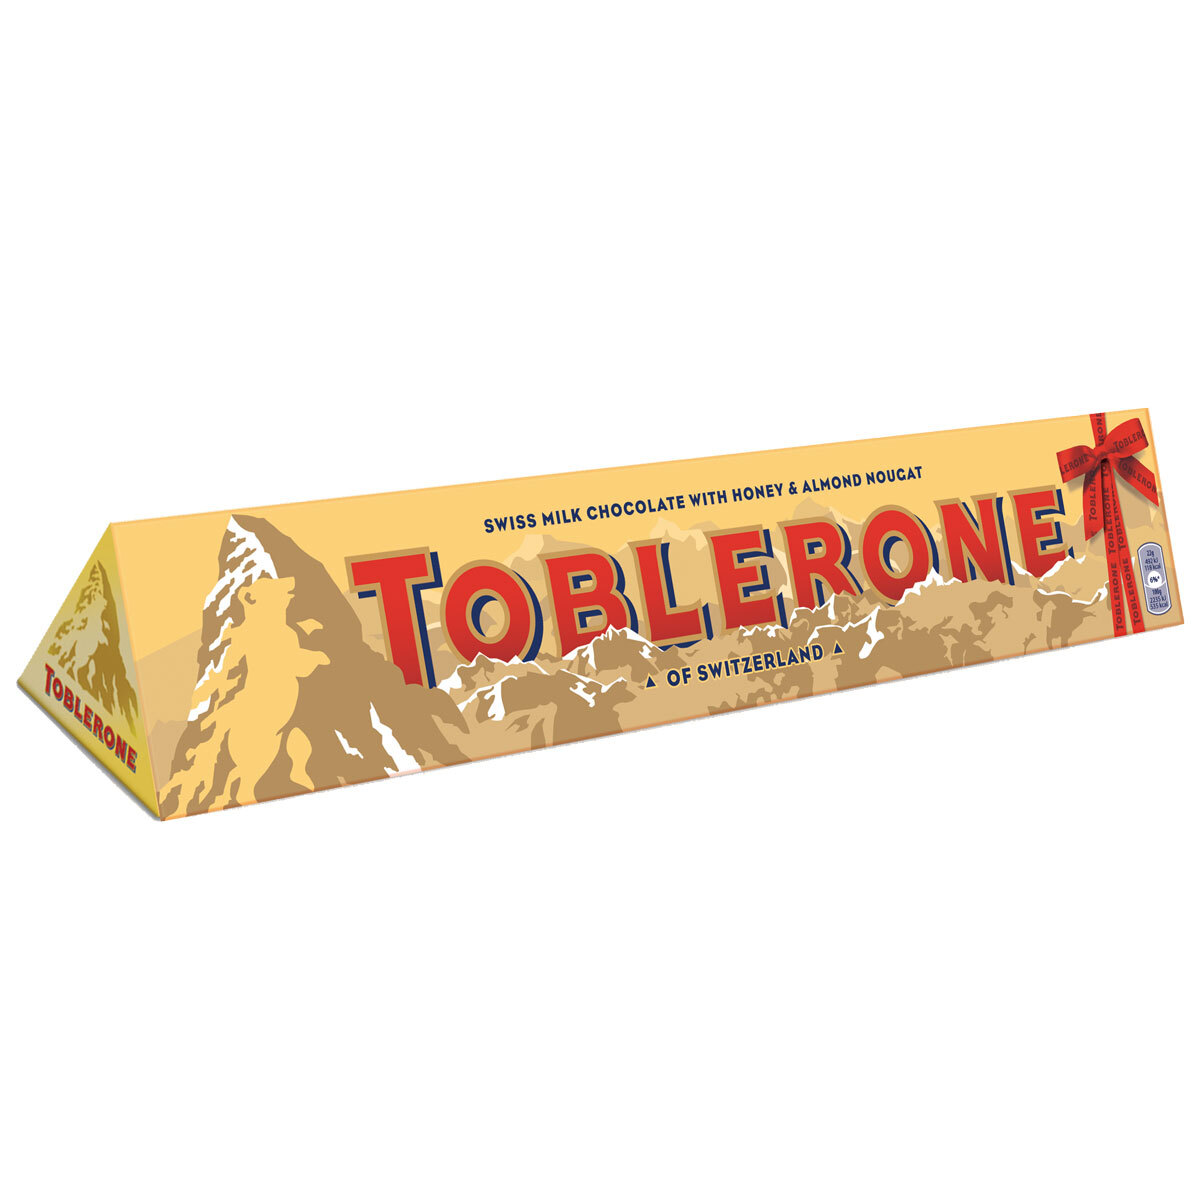 Toblerone 4.5kg, made by Toblerone - chocolate from Switzerland